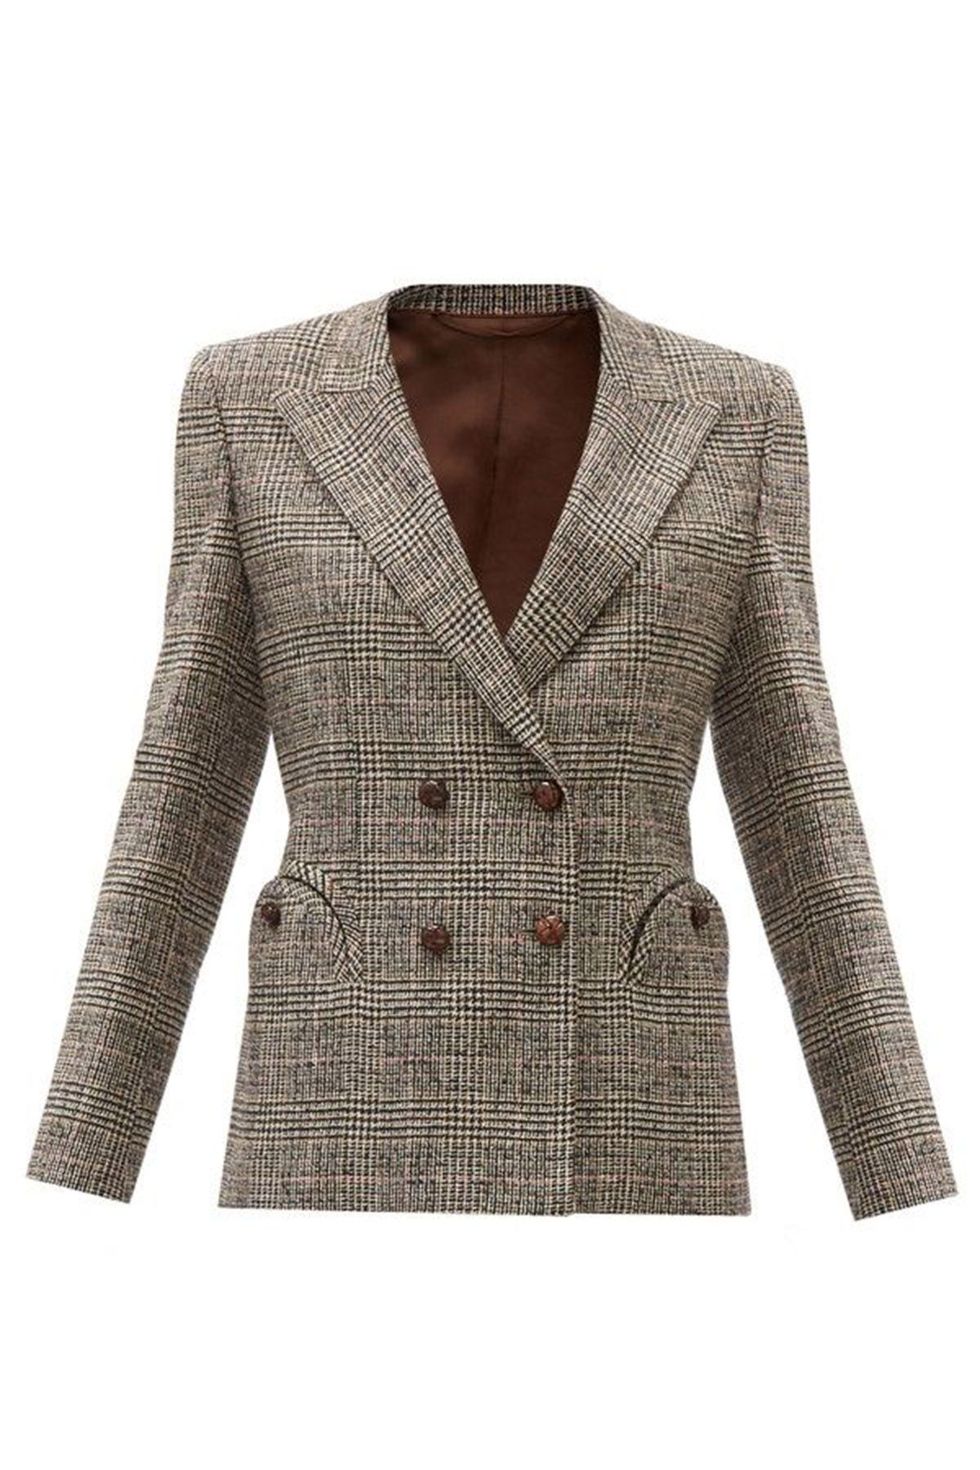 Longwood Charmer Wool-Blend Double-Breasted Jacket